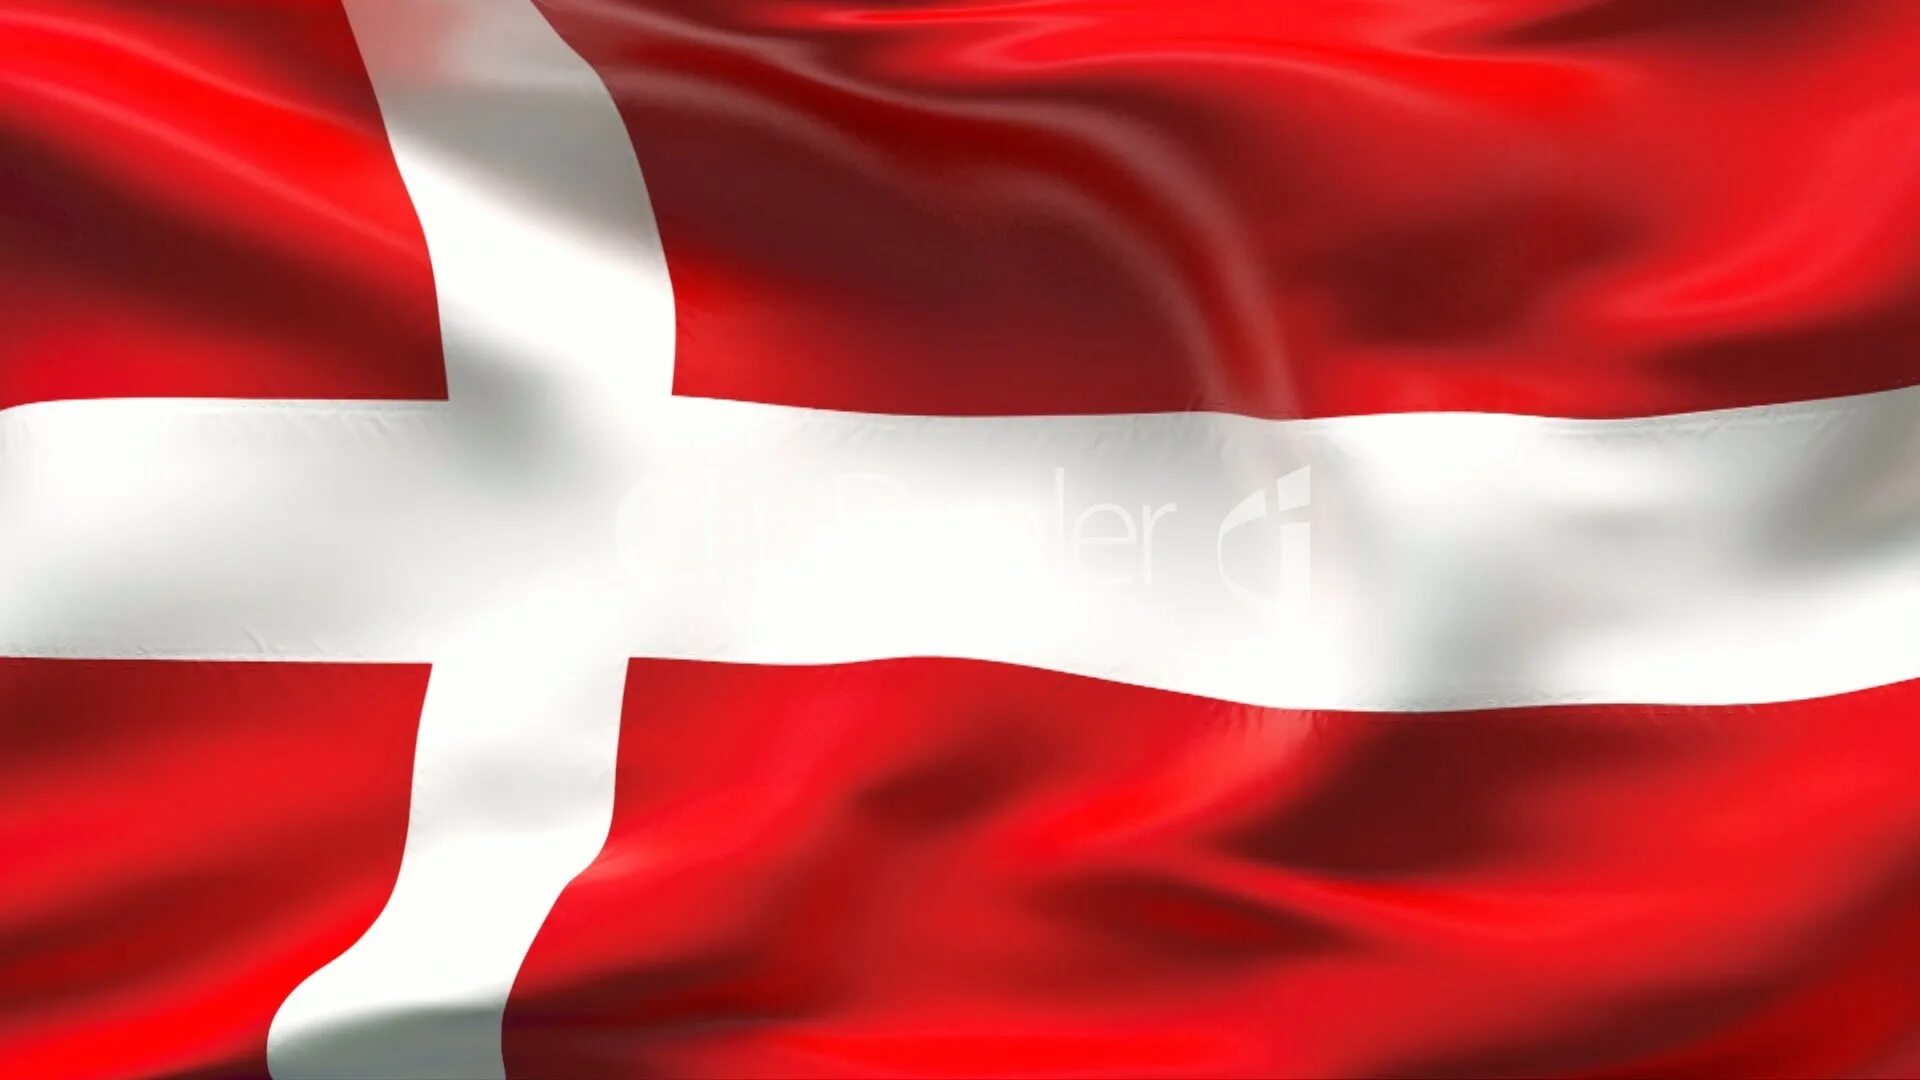 Как выглядит флаг дании. Флаг Дании 1939. Флаг Дании. Флаг Дании 1936. Денмарк флаг.